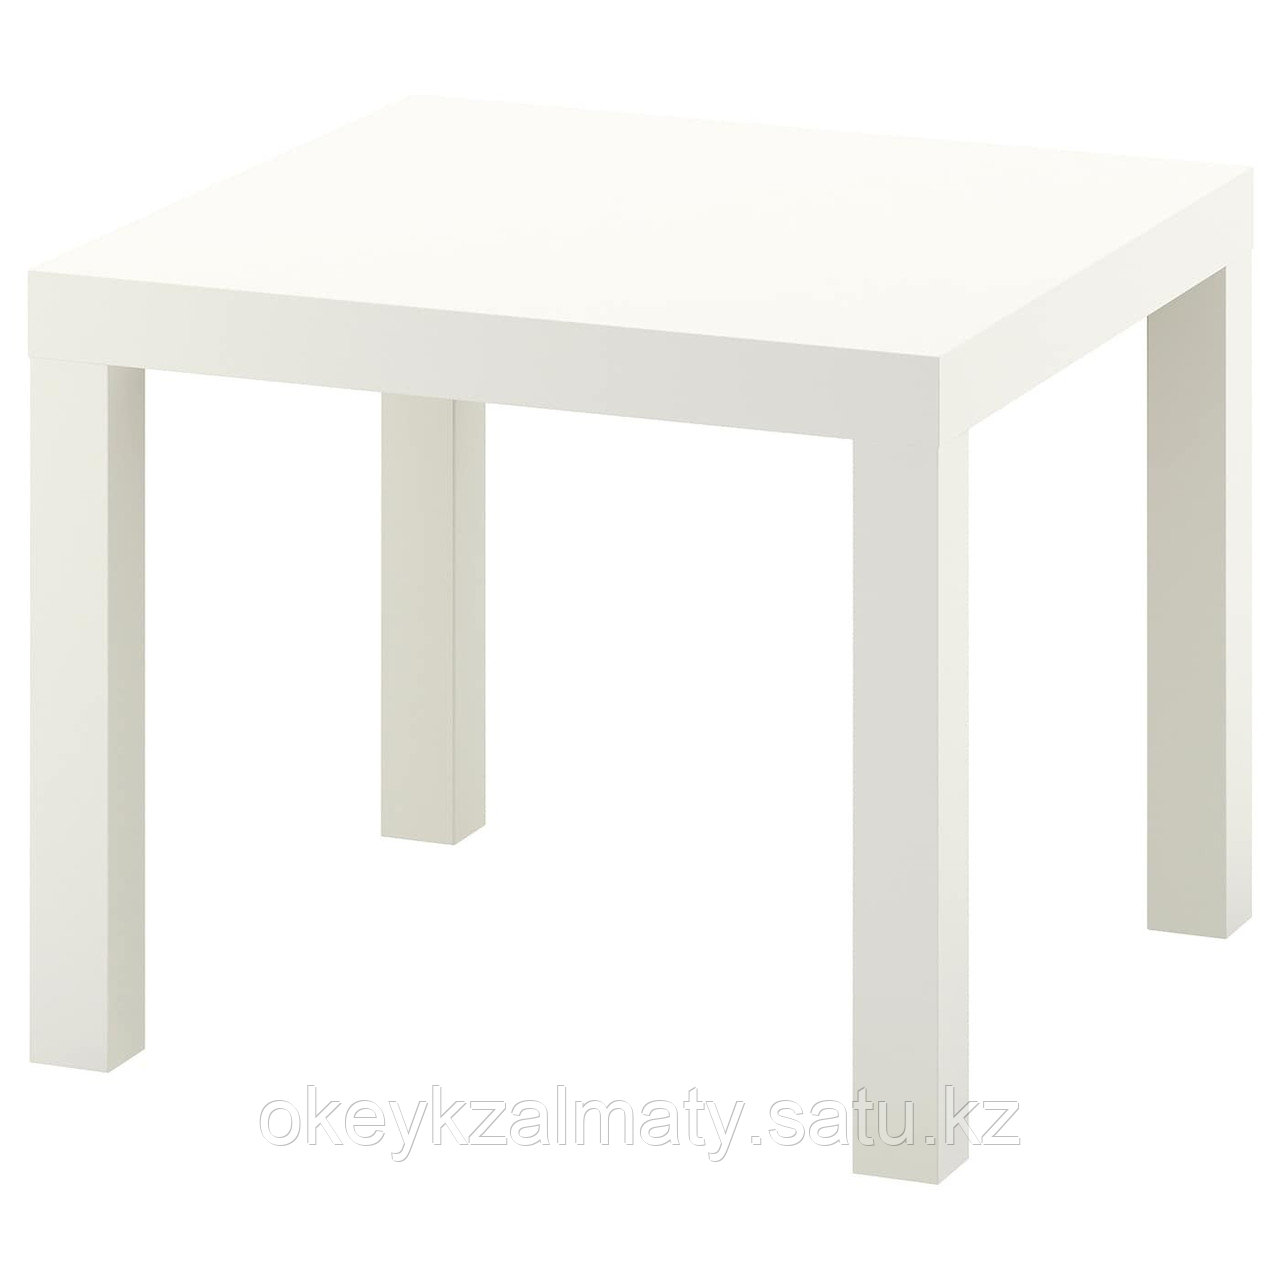 IKEA: Придиванный столик, белый, 55x55 см Lack Лакк 704.499.11